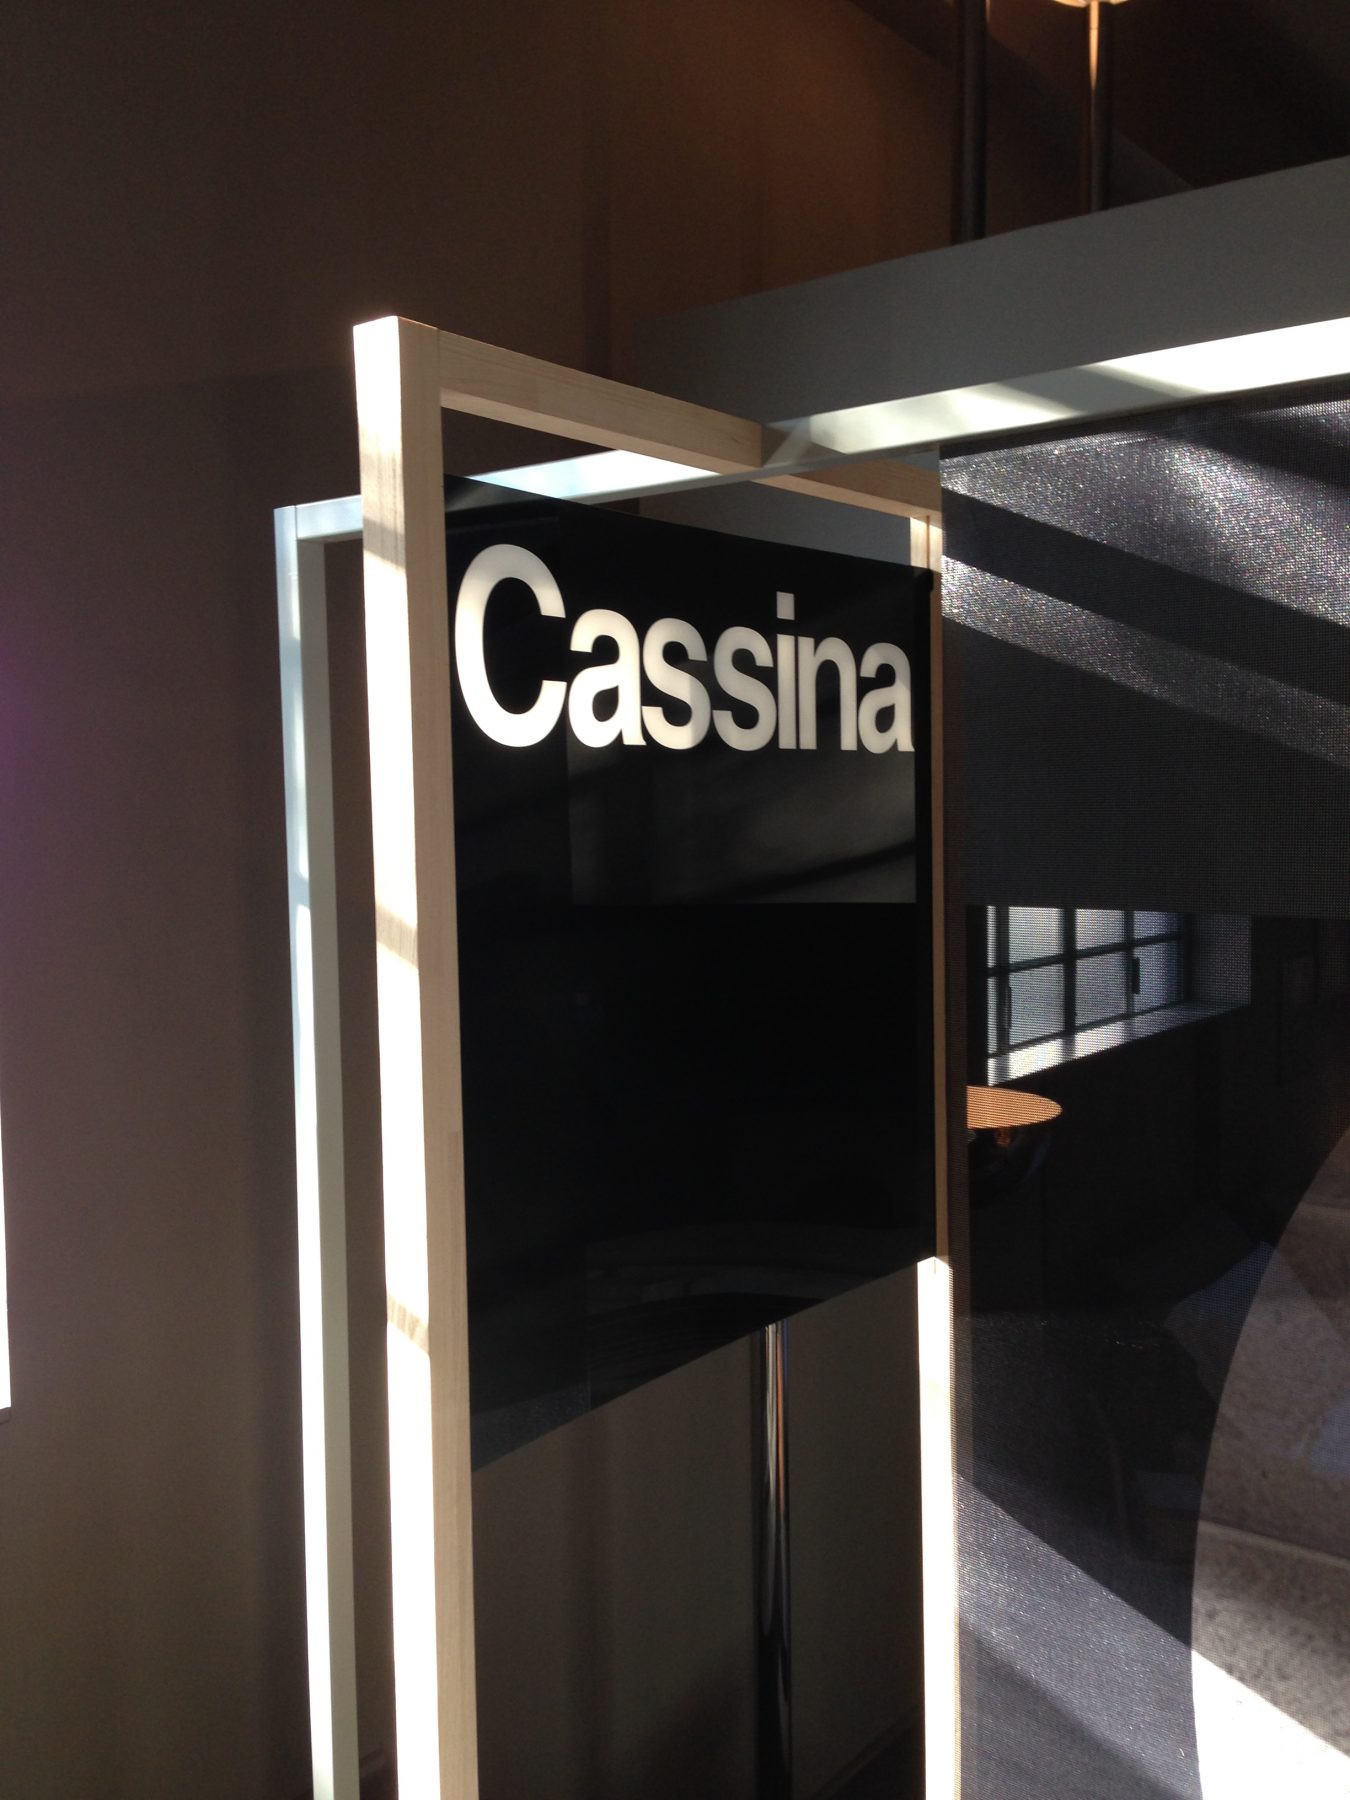 Kit Philippe Starck Cassina 2014